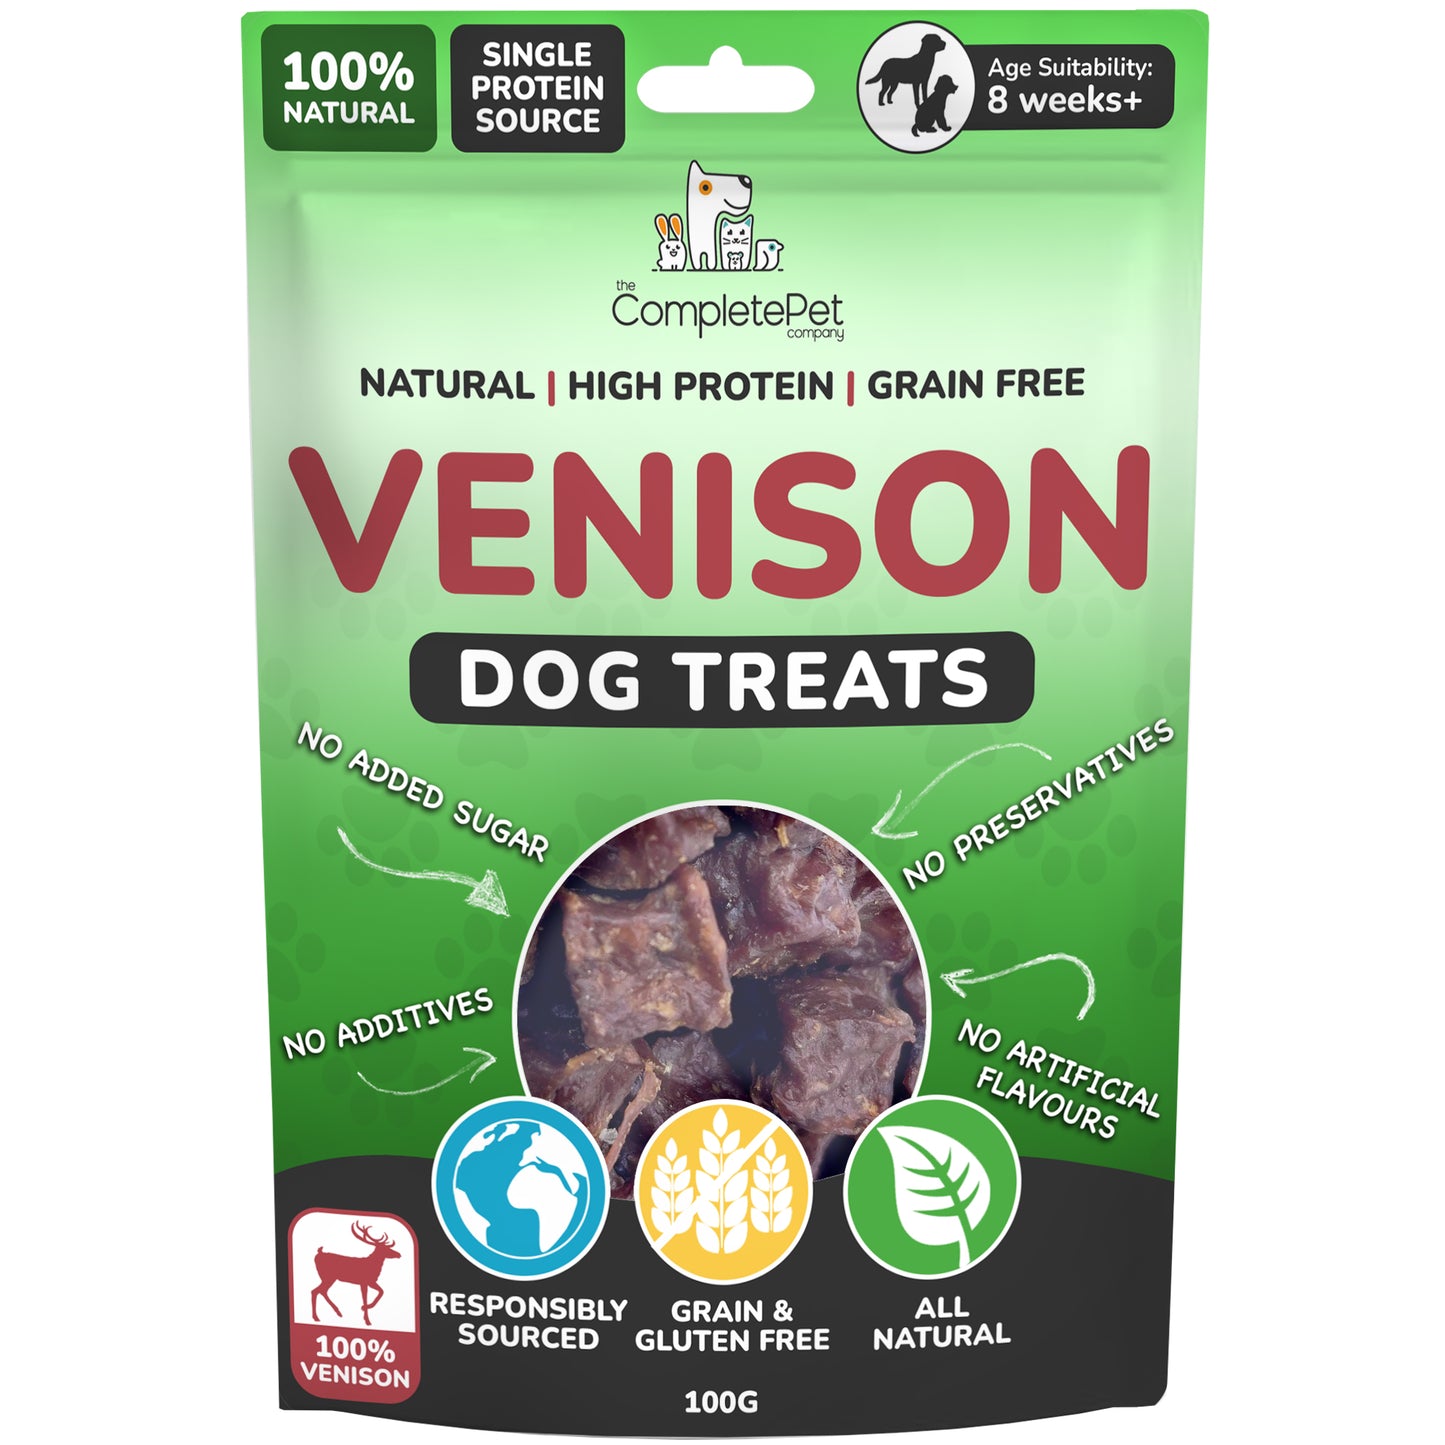 Natural Meat Dog Treats - VENISON - Low Fat Healthy Dog Training Treats